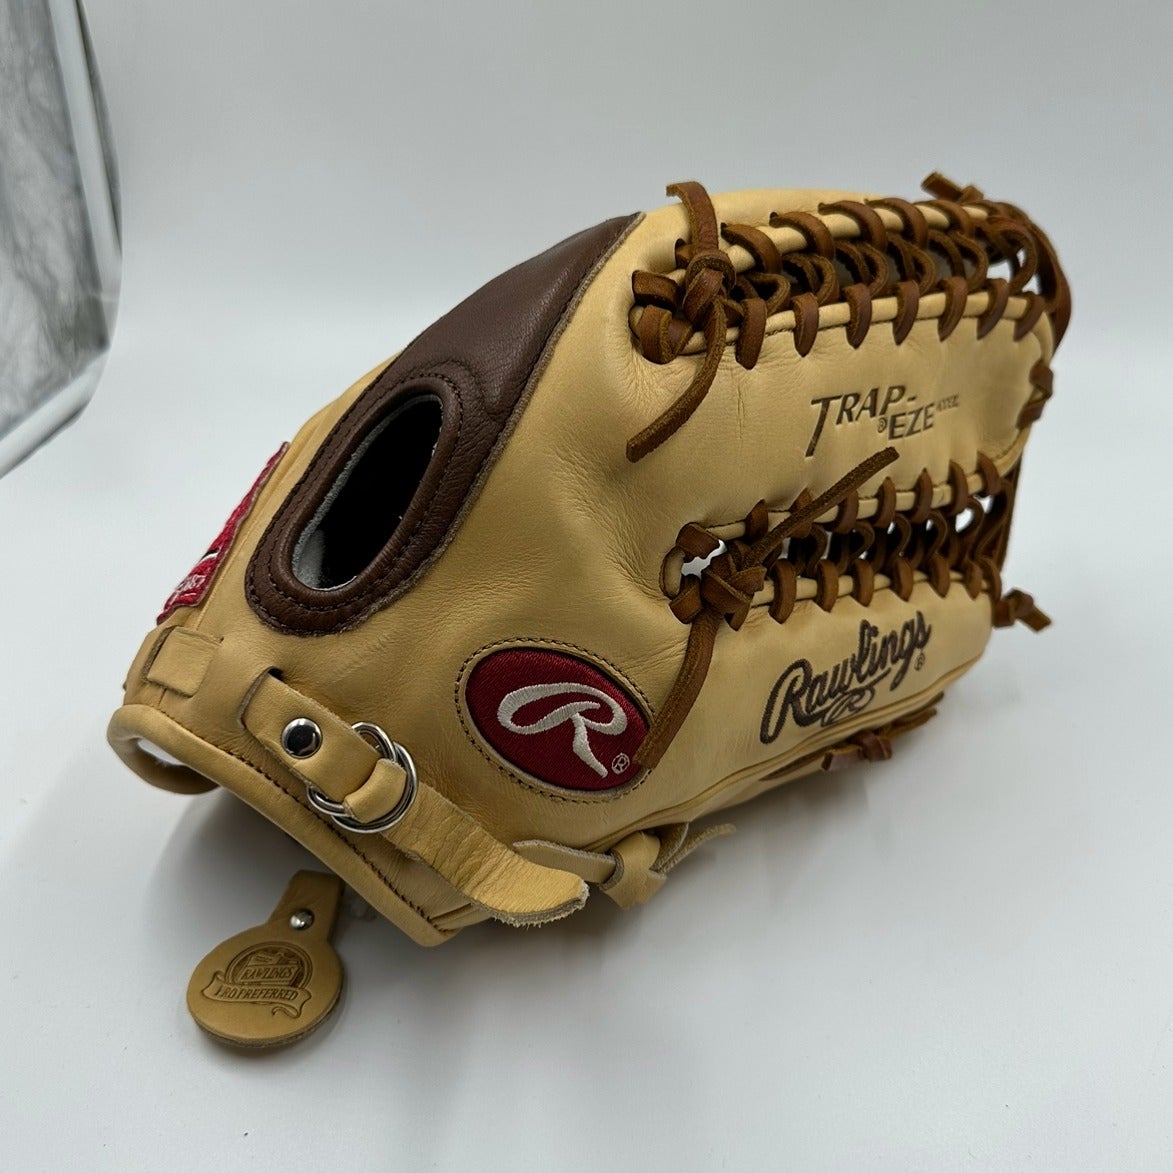 Rawlings Pro Preferred Ronald Acuna Jr. 12.75 Baseball Glove (PROSRA13)